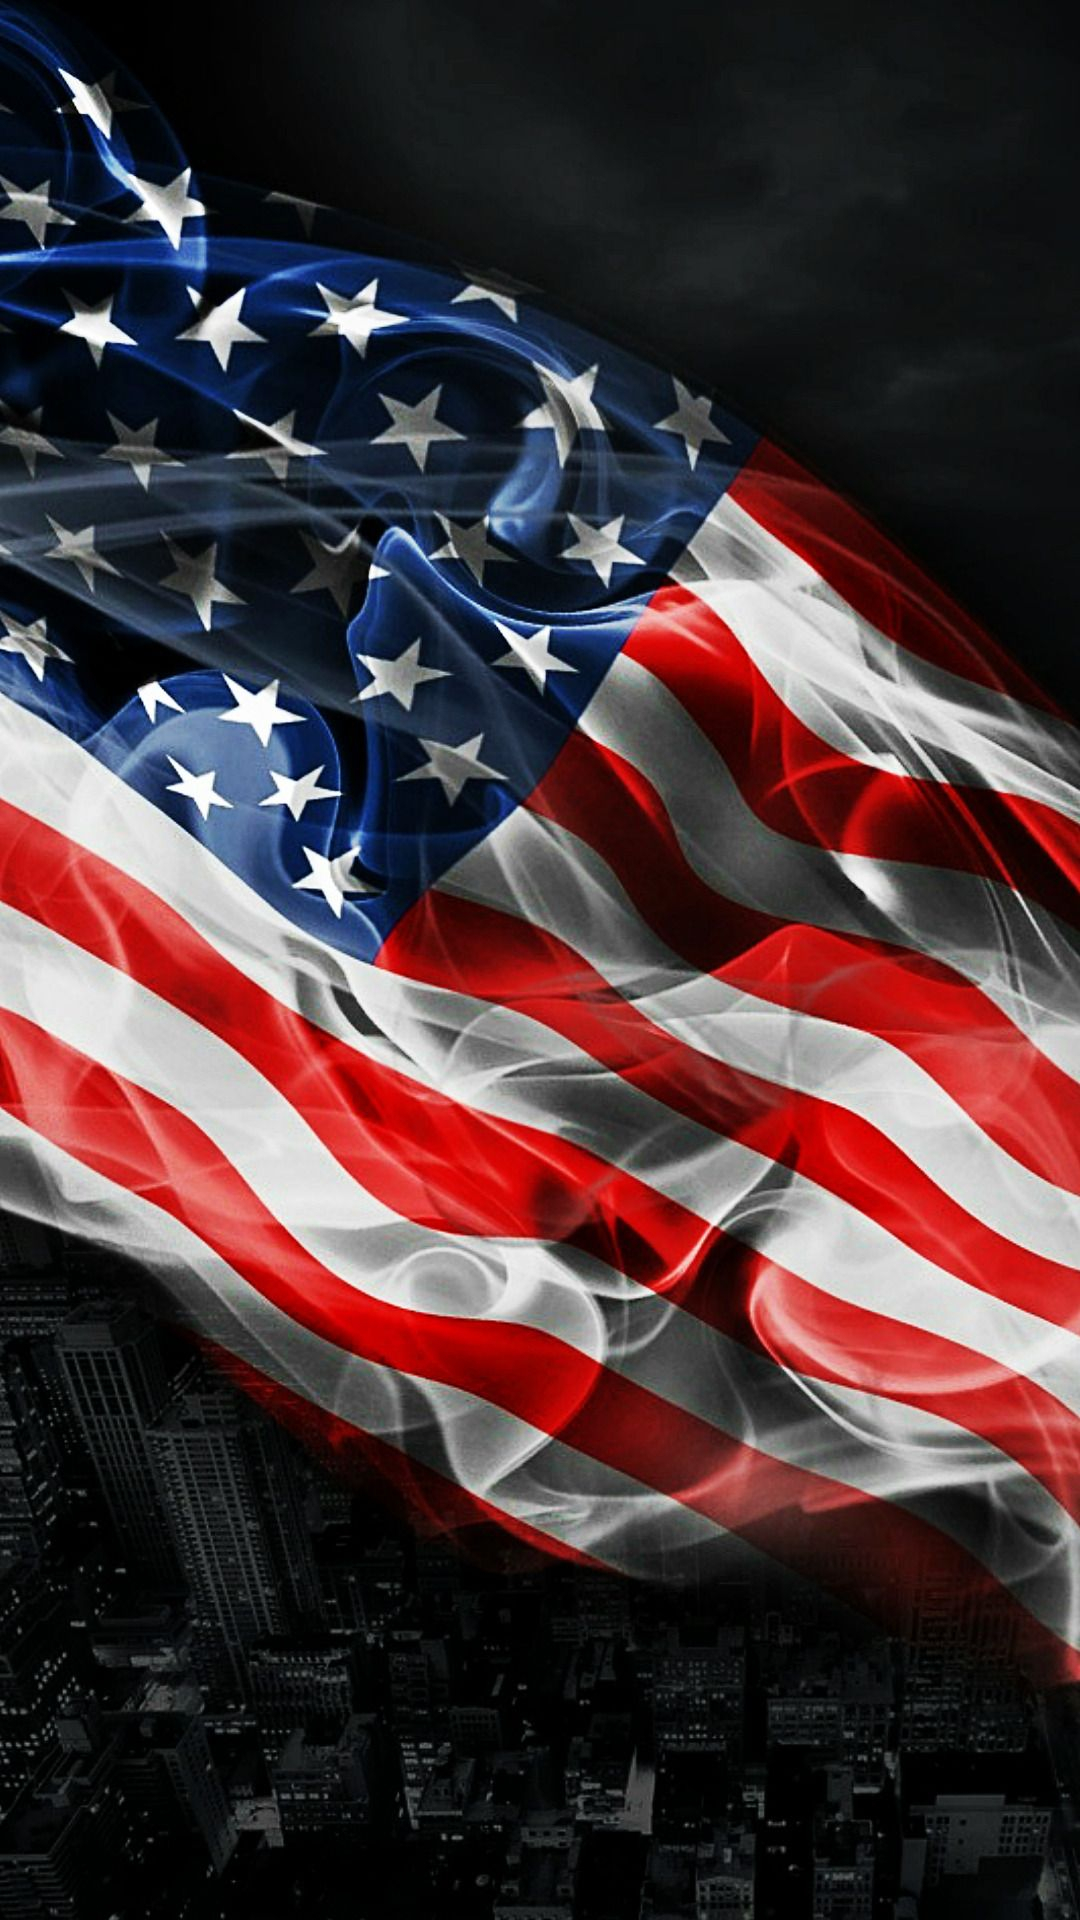 1080x1920 Marine | American flag wallpaper, America flag wallpaper, Usa flag wallpaper